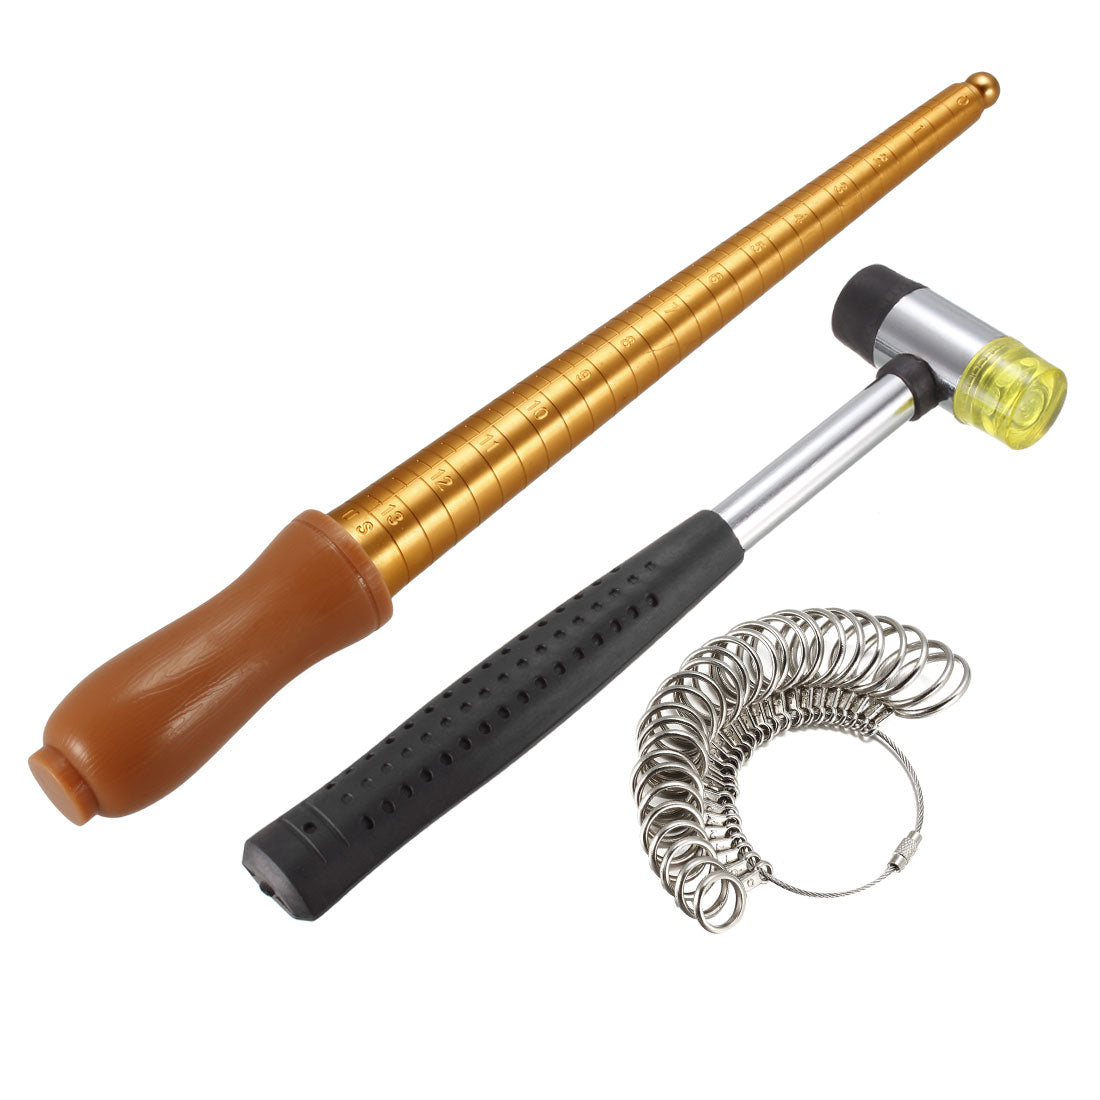 uxcell Uxcell Ring Sizer Mandrel Kit US 0-13 Finger Measuring Stick Ruler Gauge Copper Plating Aluminum with 27 Zinc Alloy Circle Models Rubber Hammer 1 Set